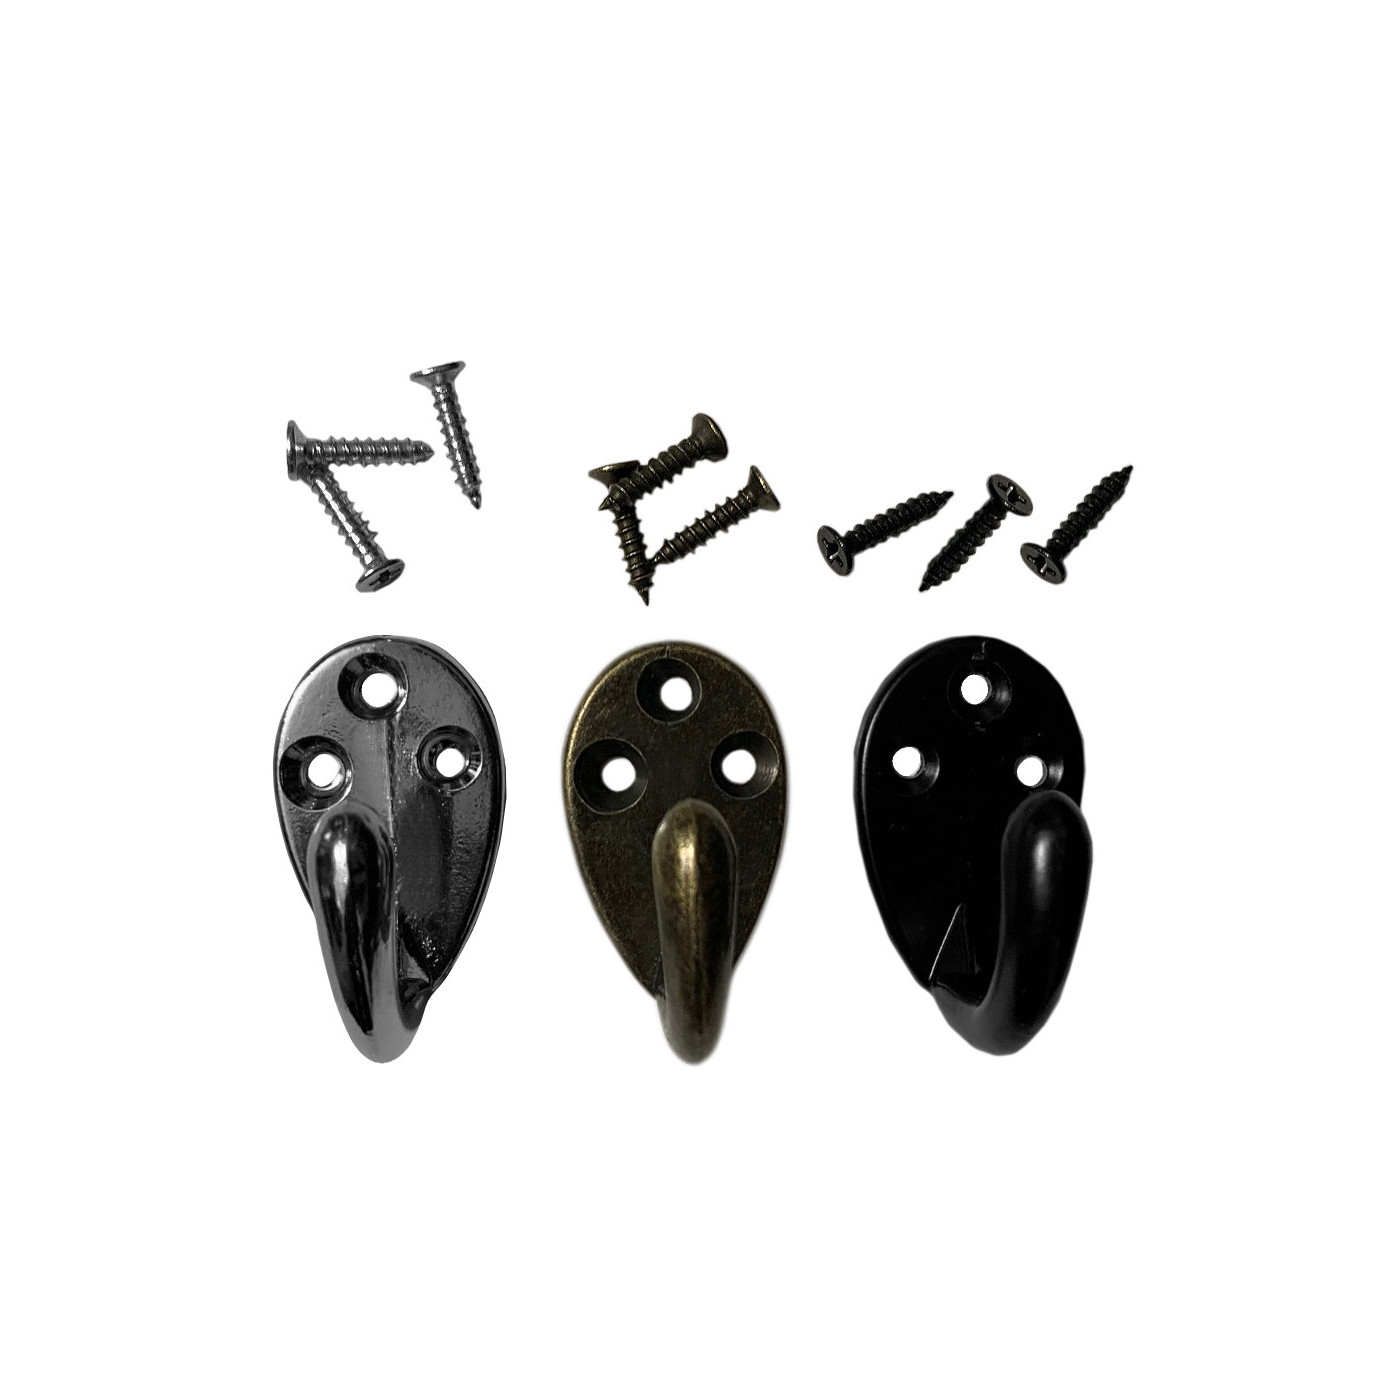 Set of 10 small metal clothes hooks, coat hangers (color: black)